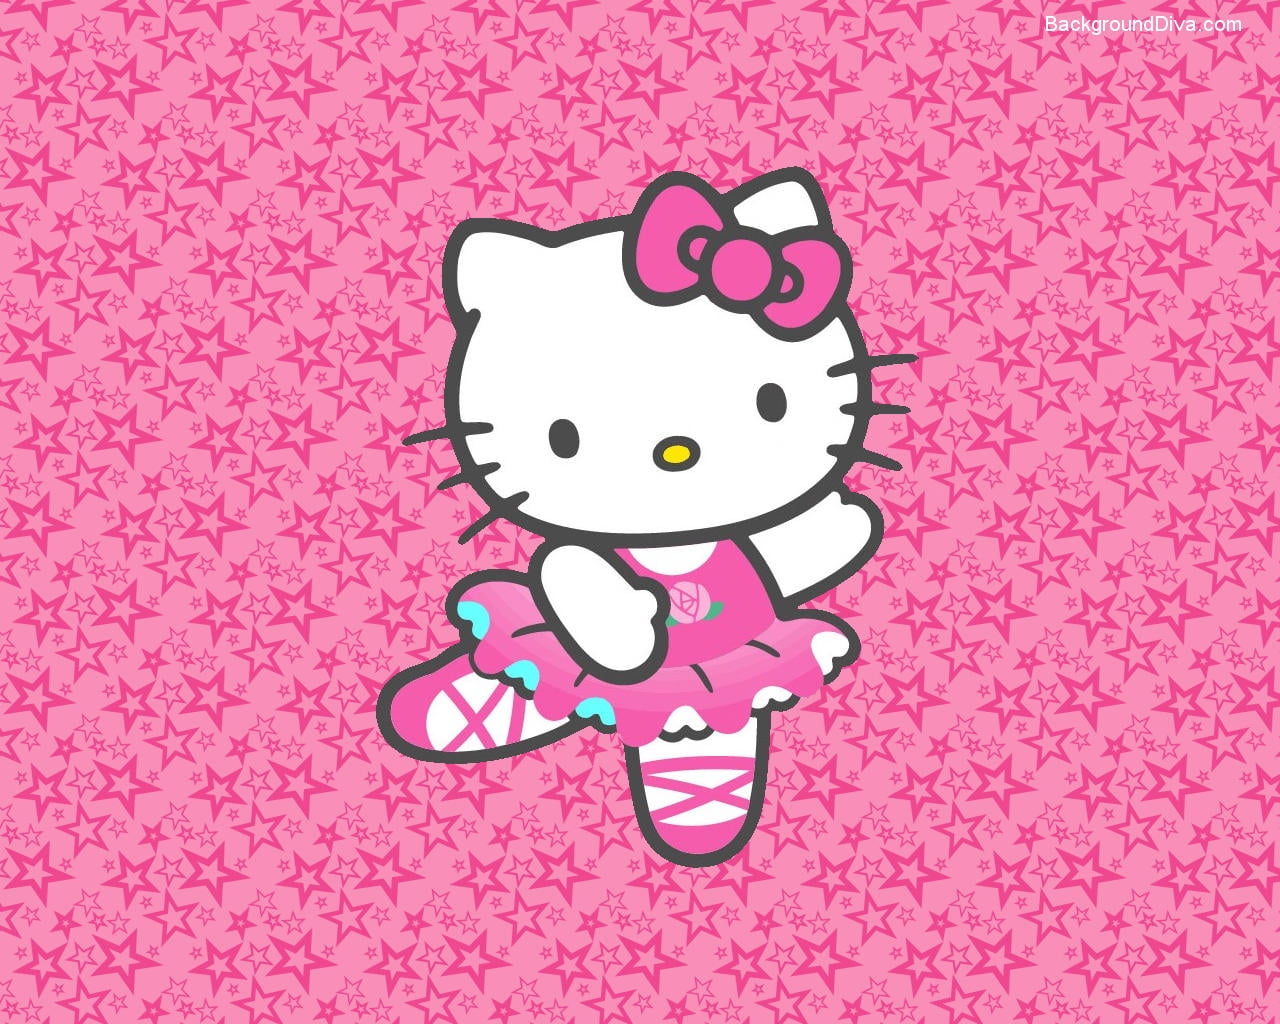  Hello Kitty Ballerina  Dancing on Pink Starry Background 